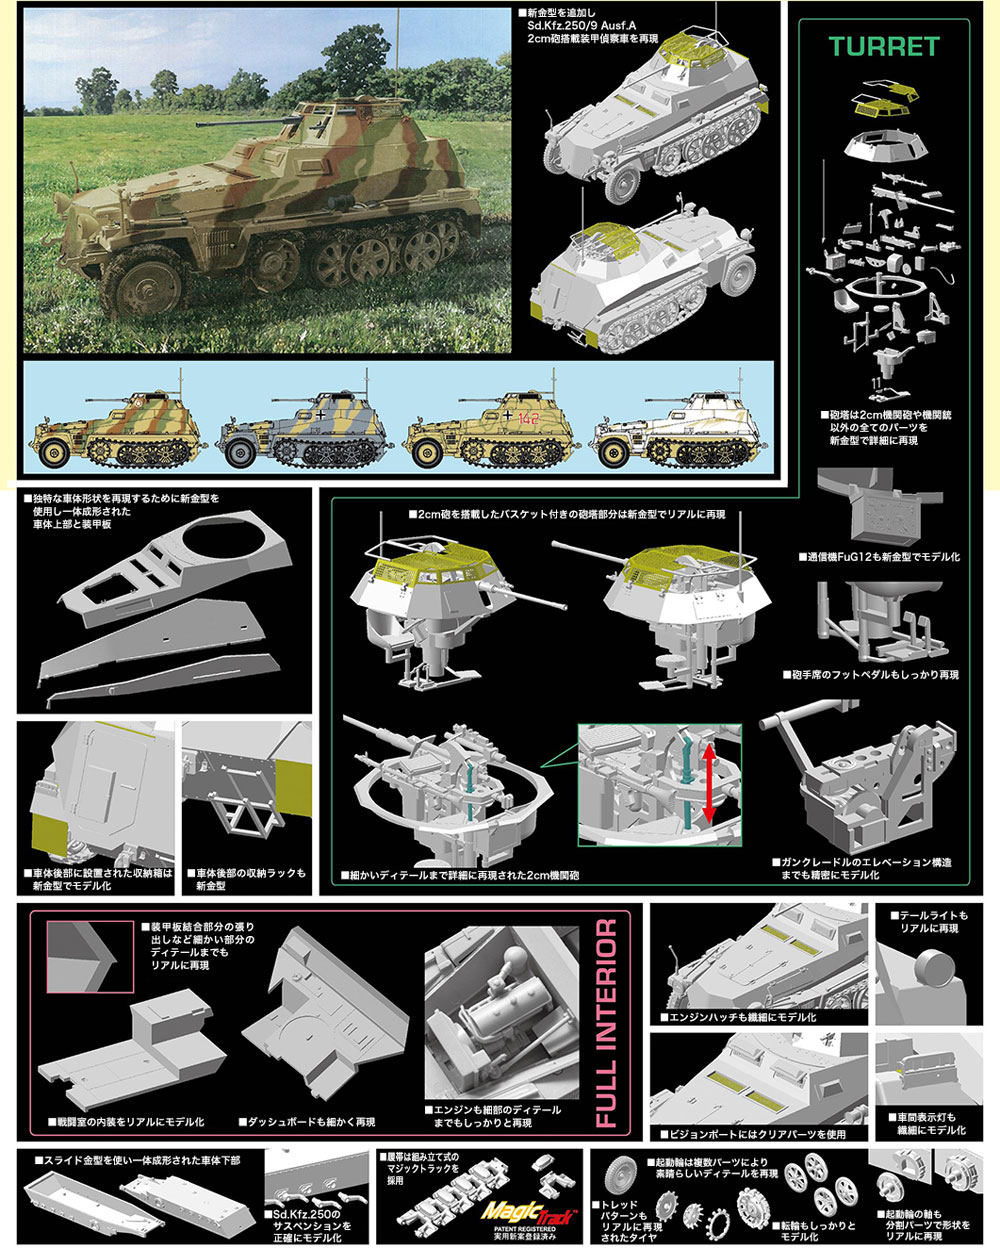 Sd.Kfz.250/9 Ausf.A 2cm砲搭載 装甲偵察車 プラモデル (ドラゴン 1/35 '39-45' Series No.6882) 商品画像_2